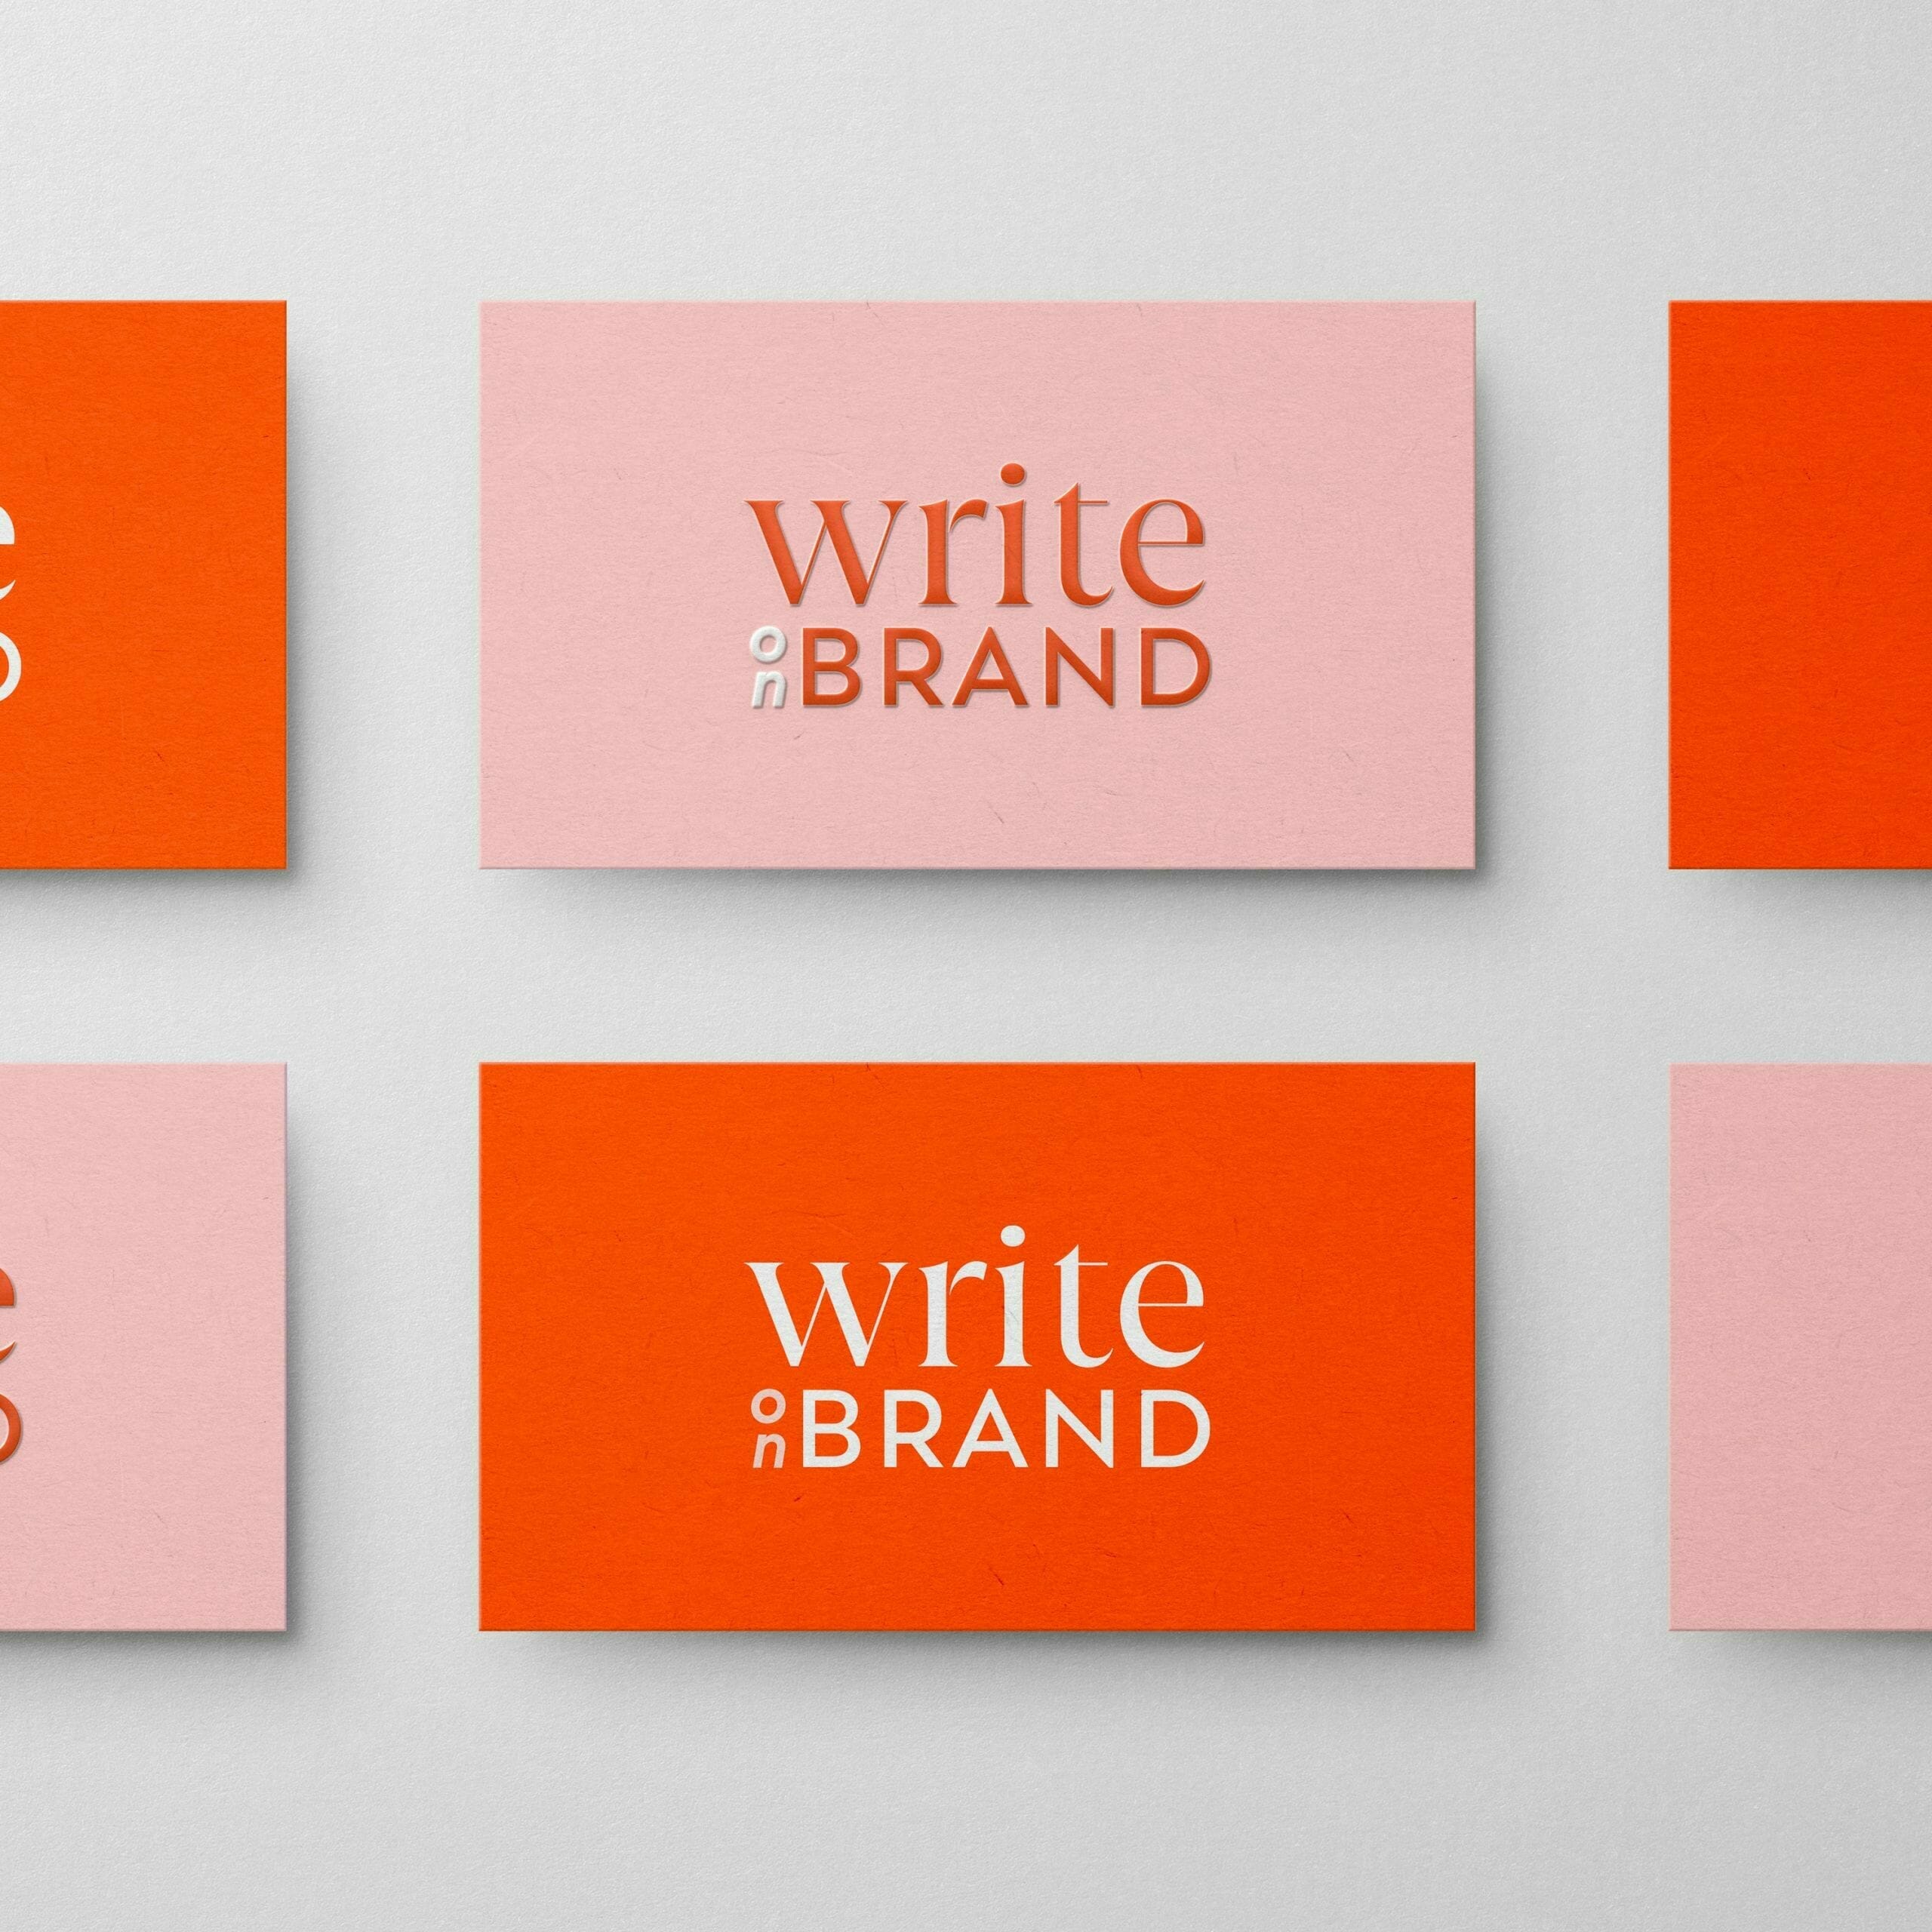 Write on Brand